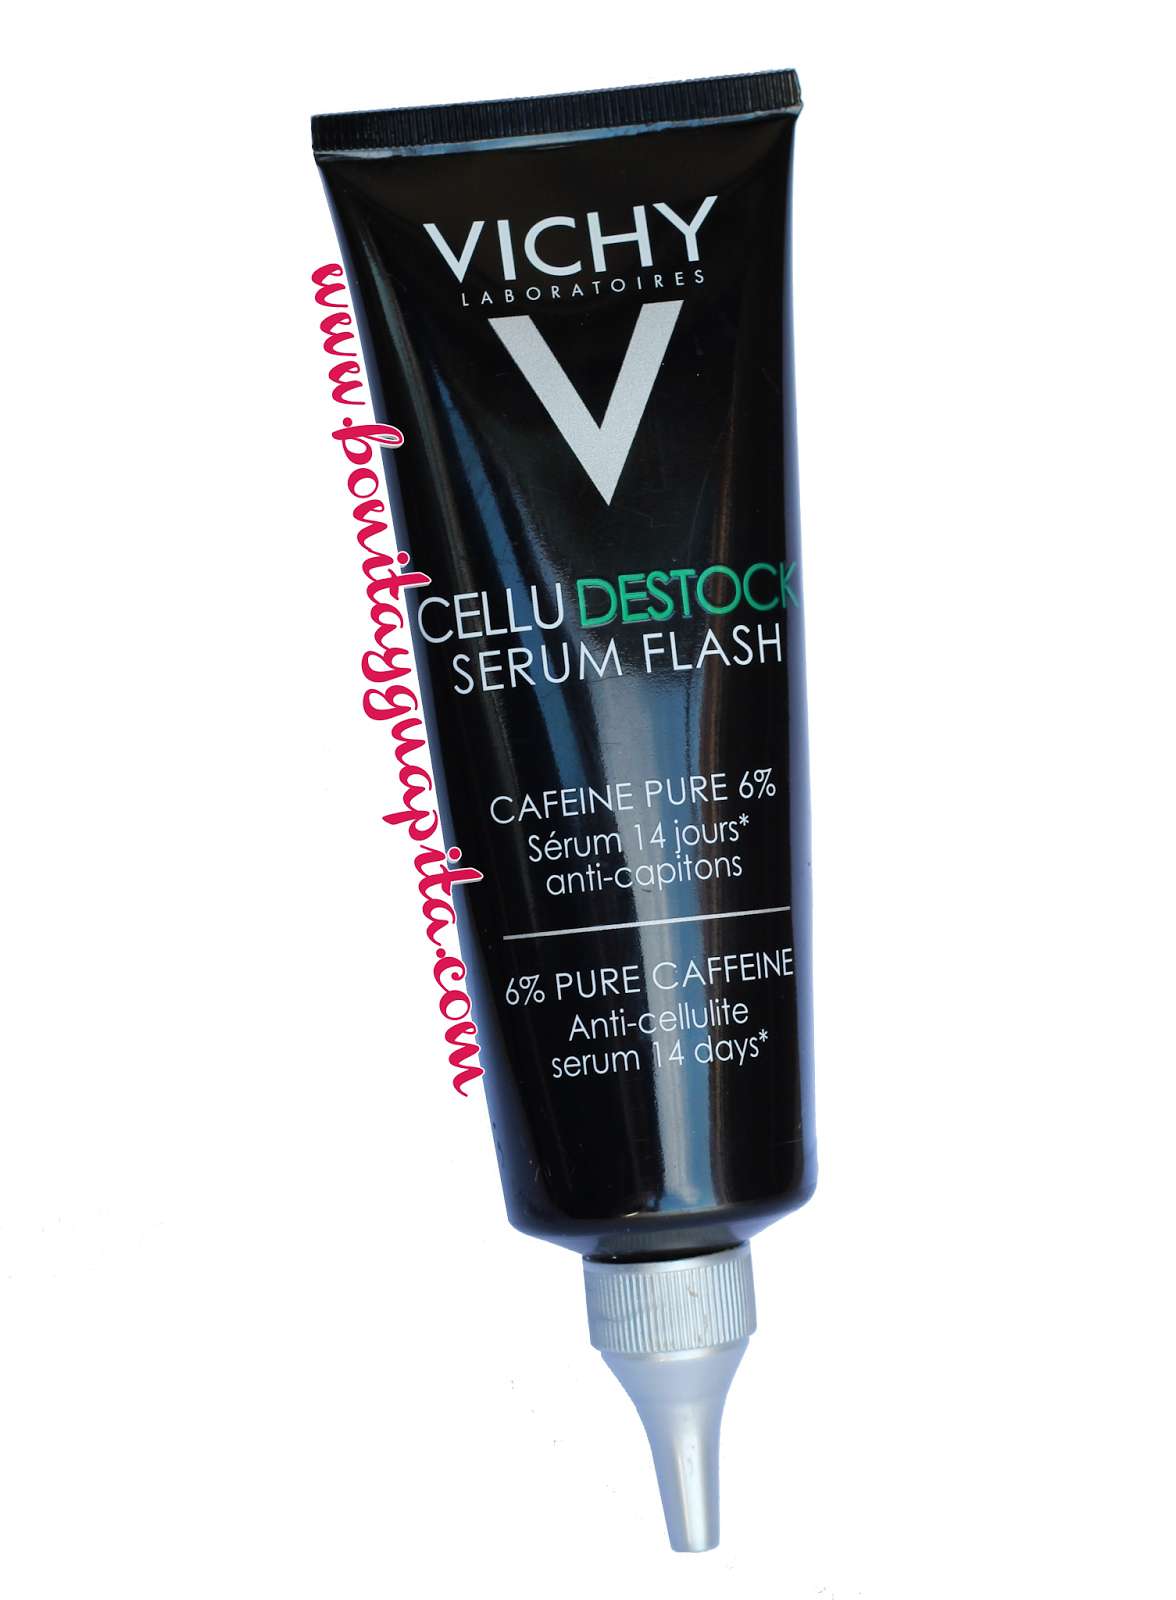 vichy cellu destock serum flash review